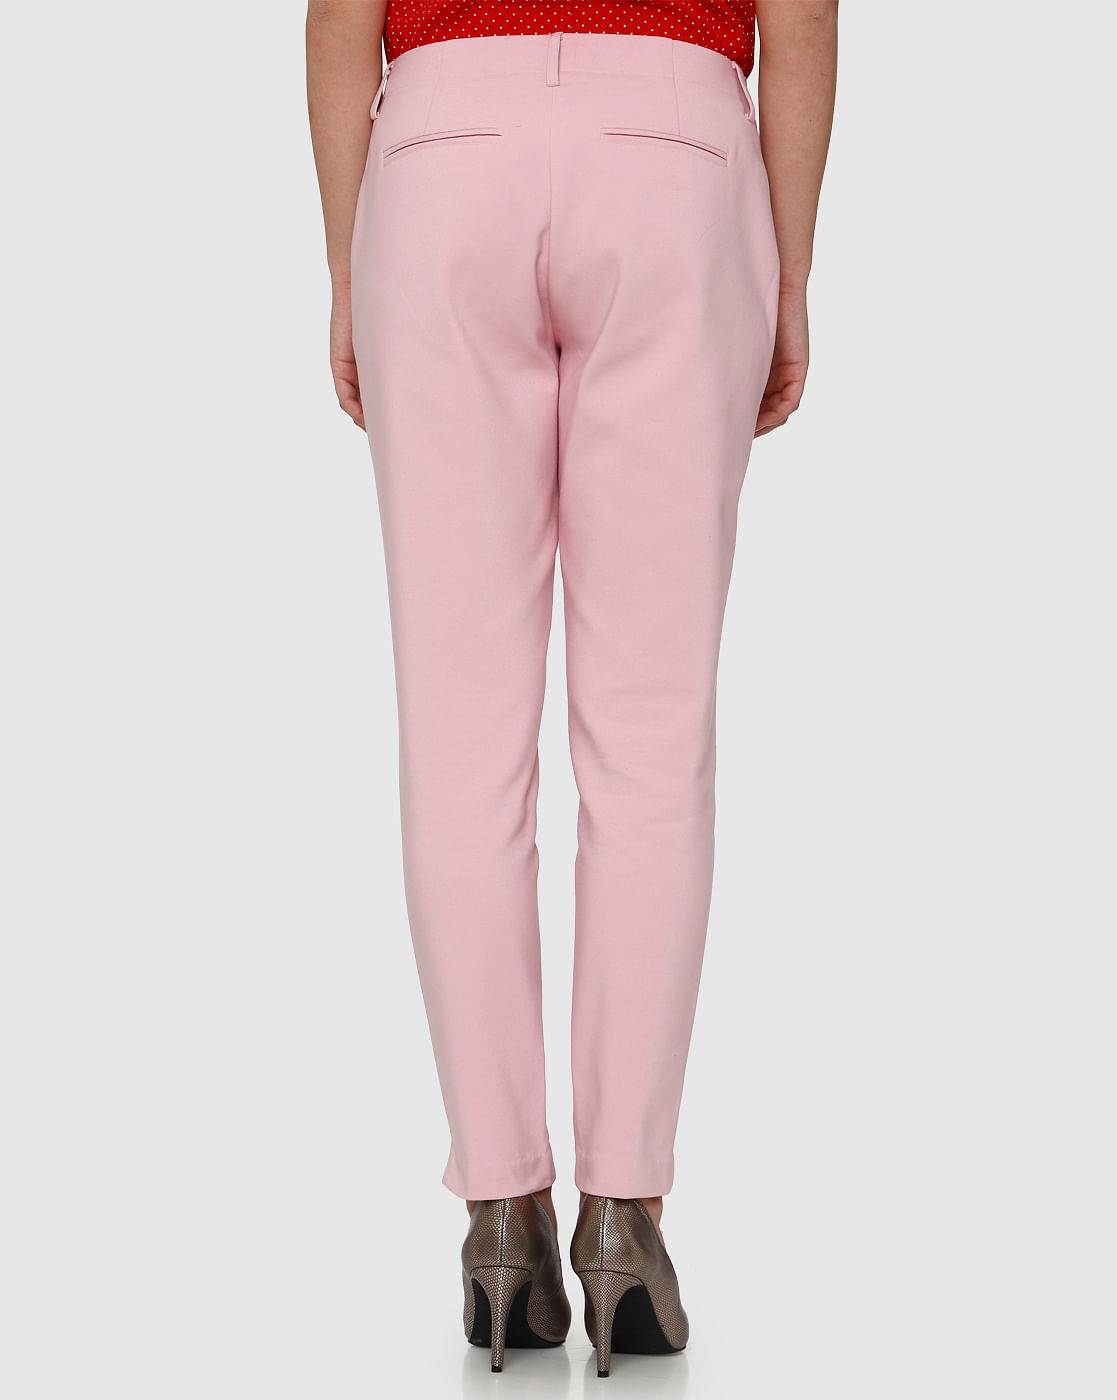 ADDYVERO Regular Fit Girls Pink Trousers  Buy ADDYVERO Regular Fit Girls  Pink Trousers Online at Best Prices in India  Flipkartcom